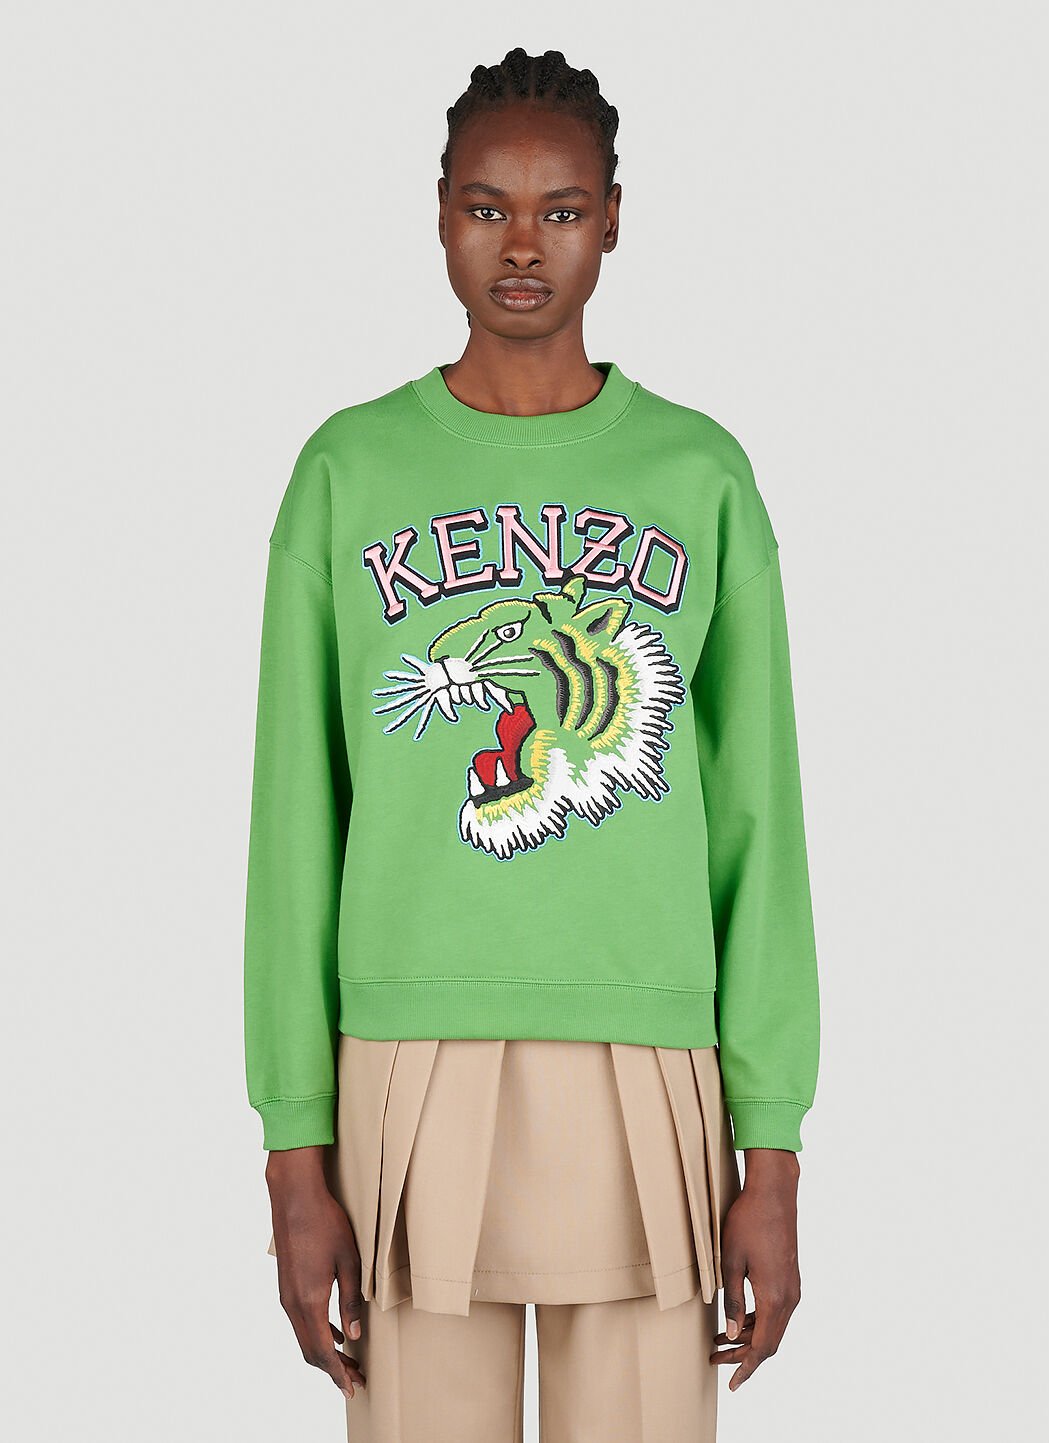 Kenzo Tiger 学院风运动衫 绿色 knz0253017